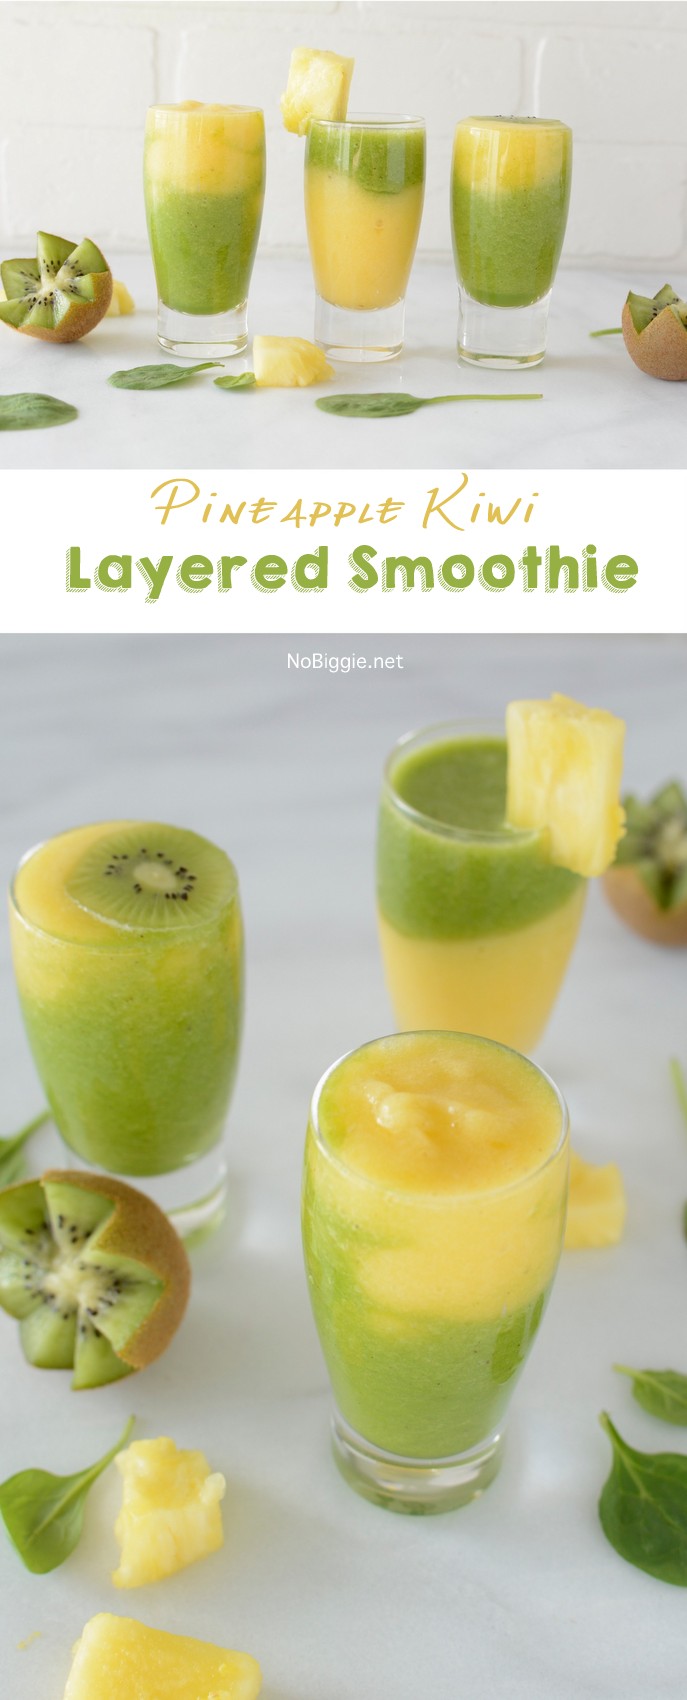 Pineapple Kiwi smoothie | NoBiggie.net